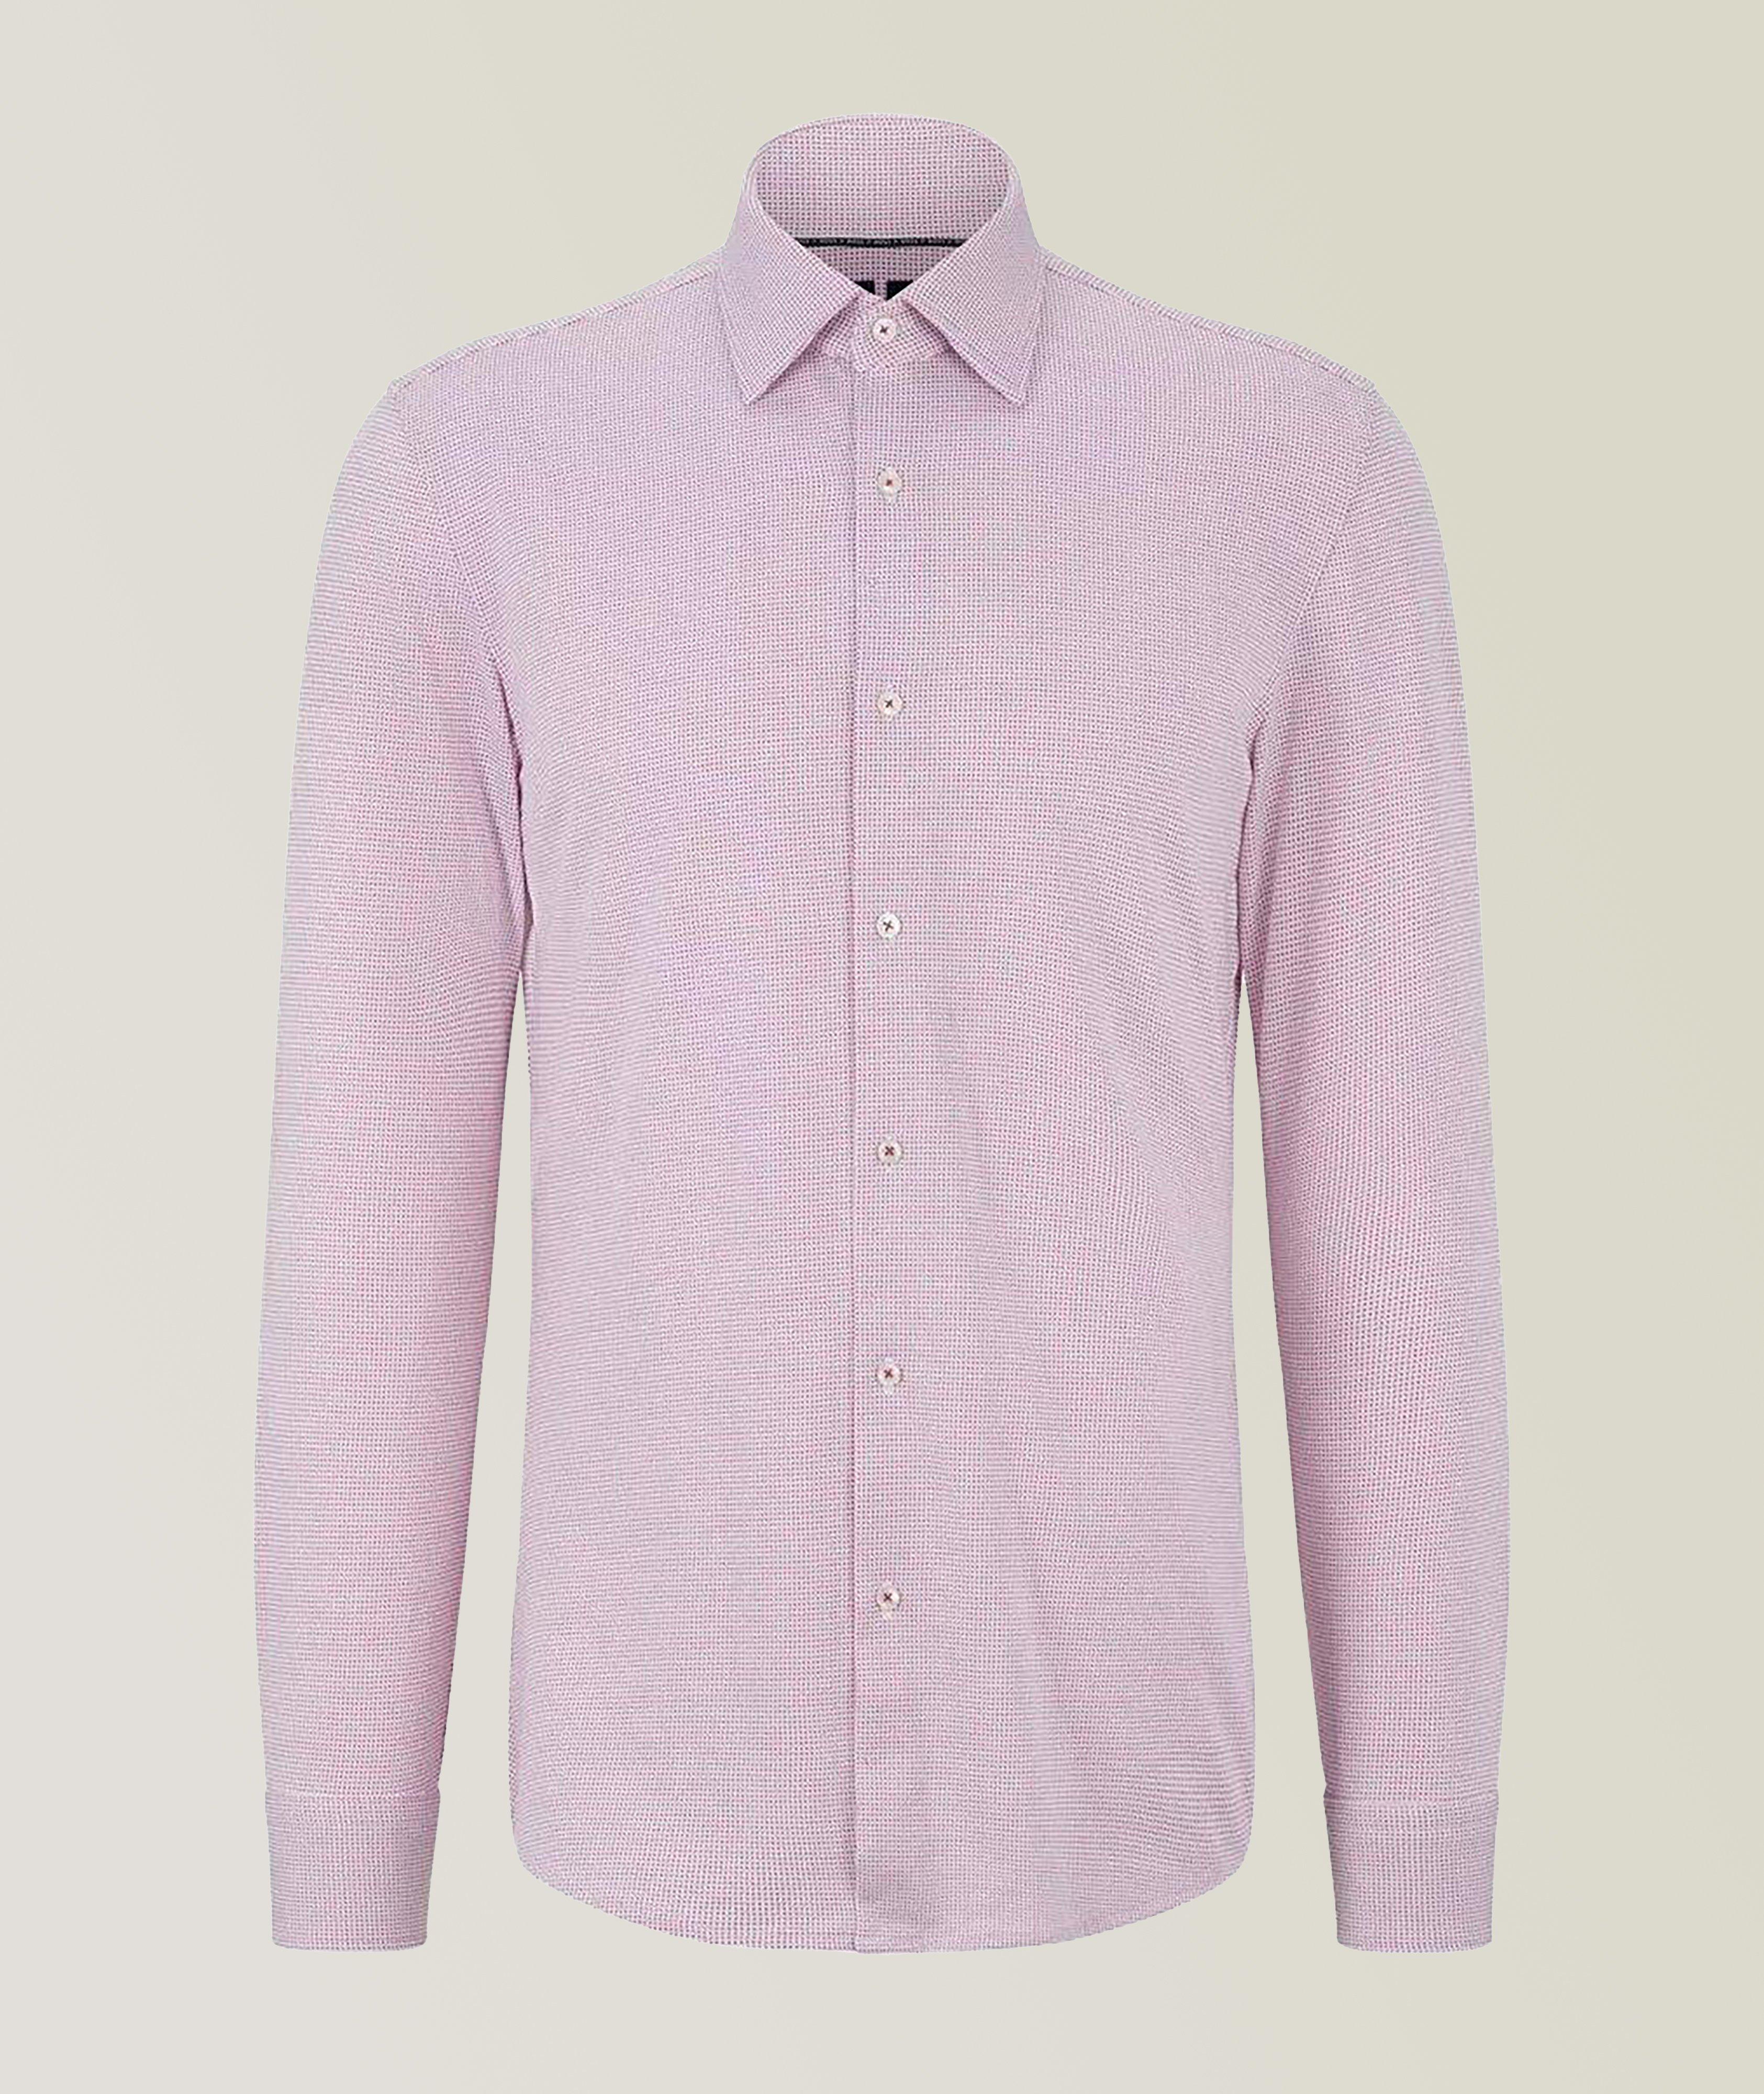 Slim-Fit Cotton Jersey Blend Dress Shirt  image 0